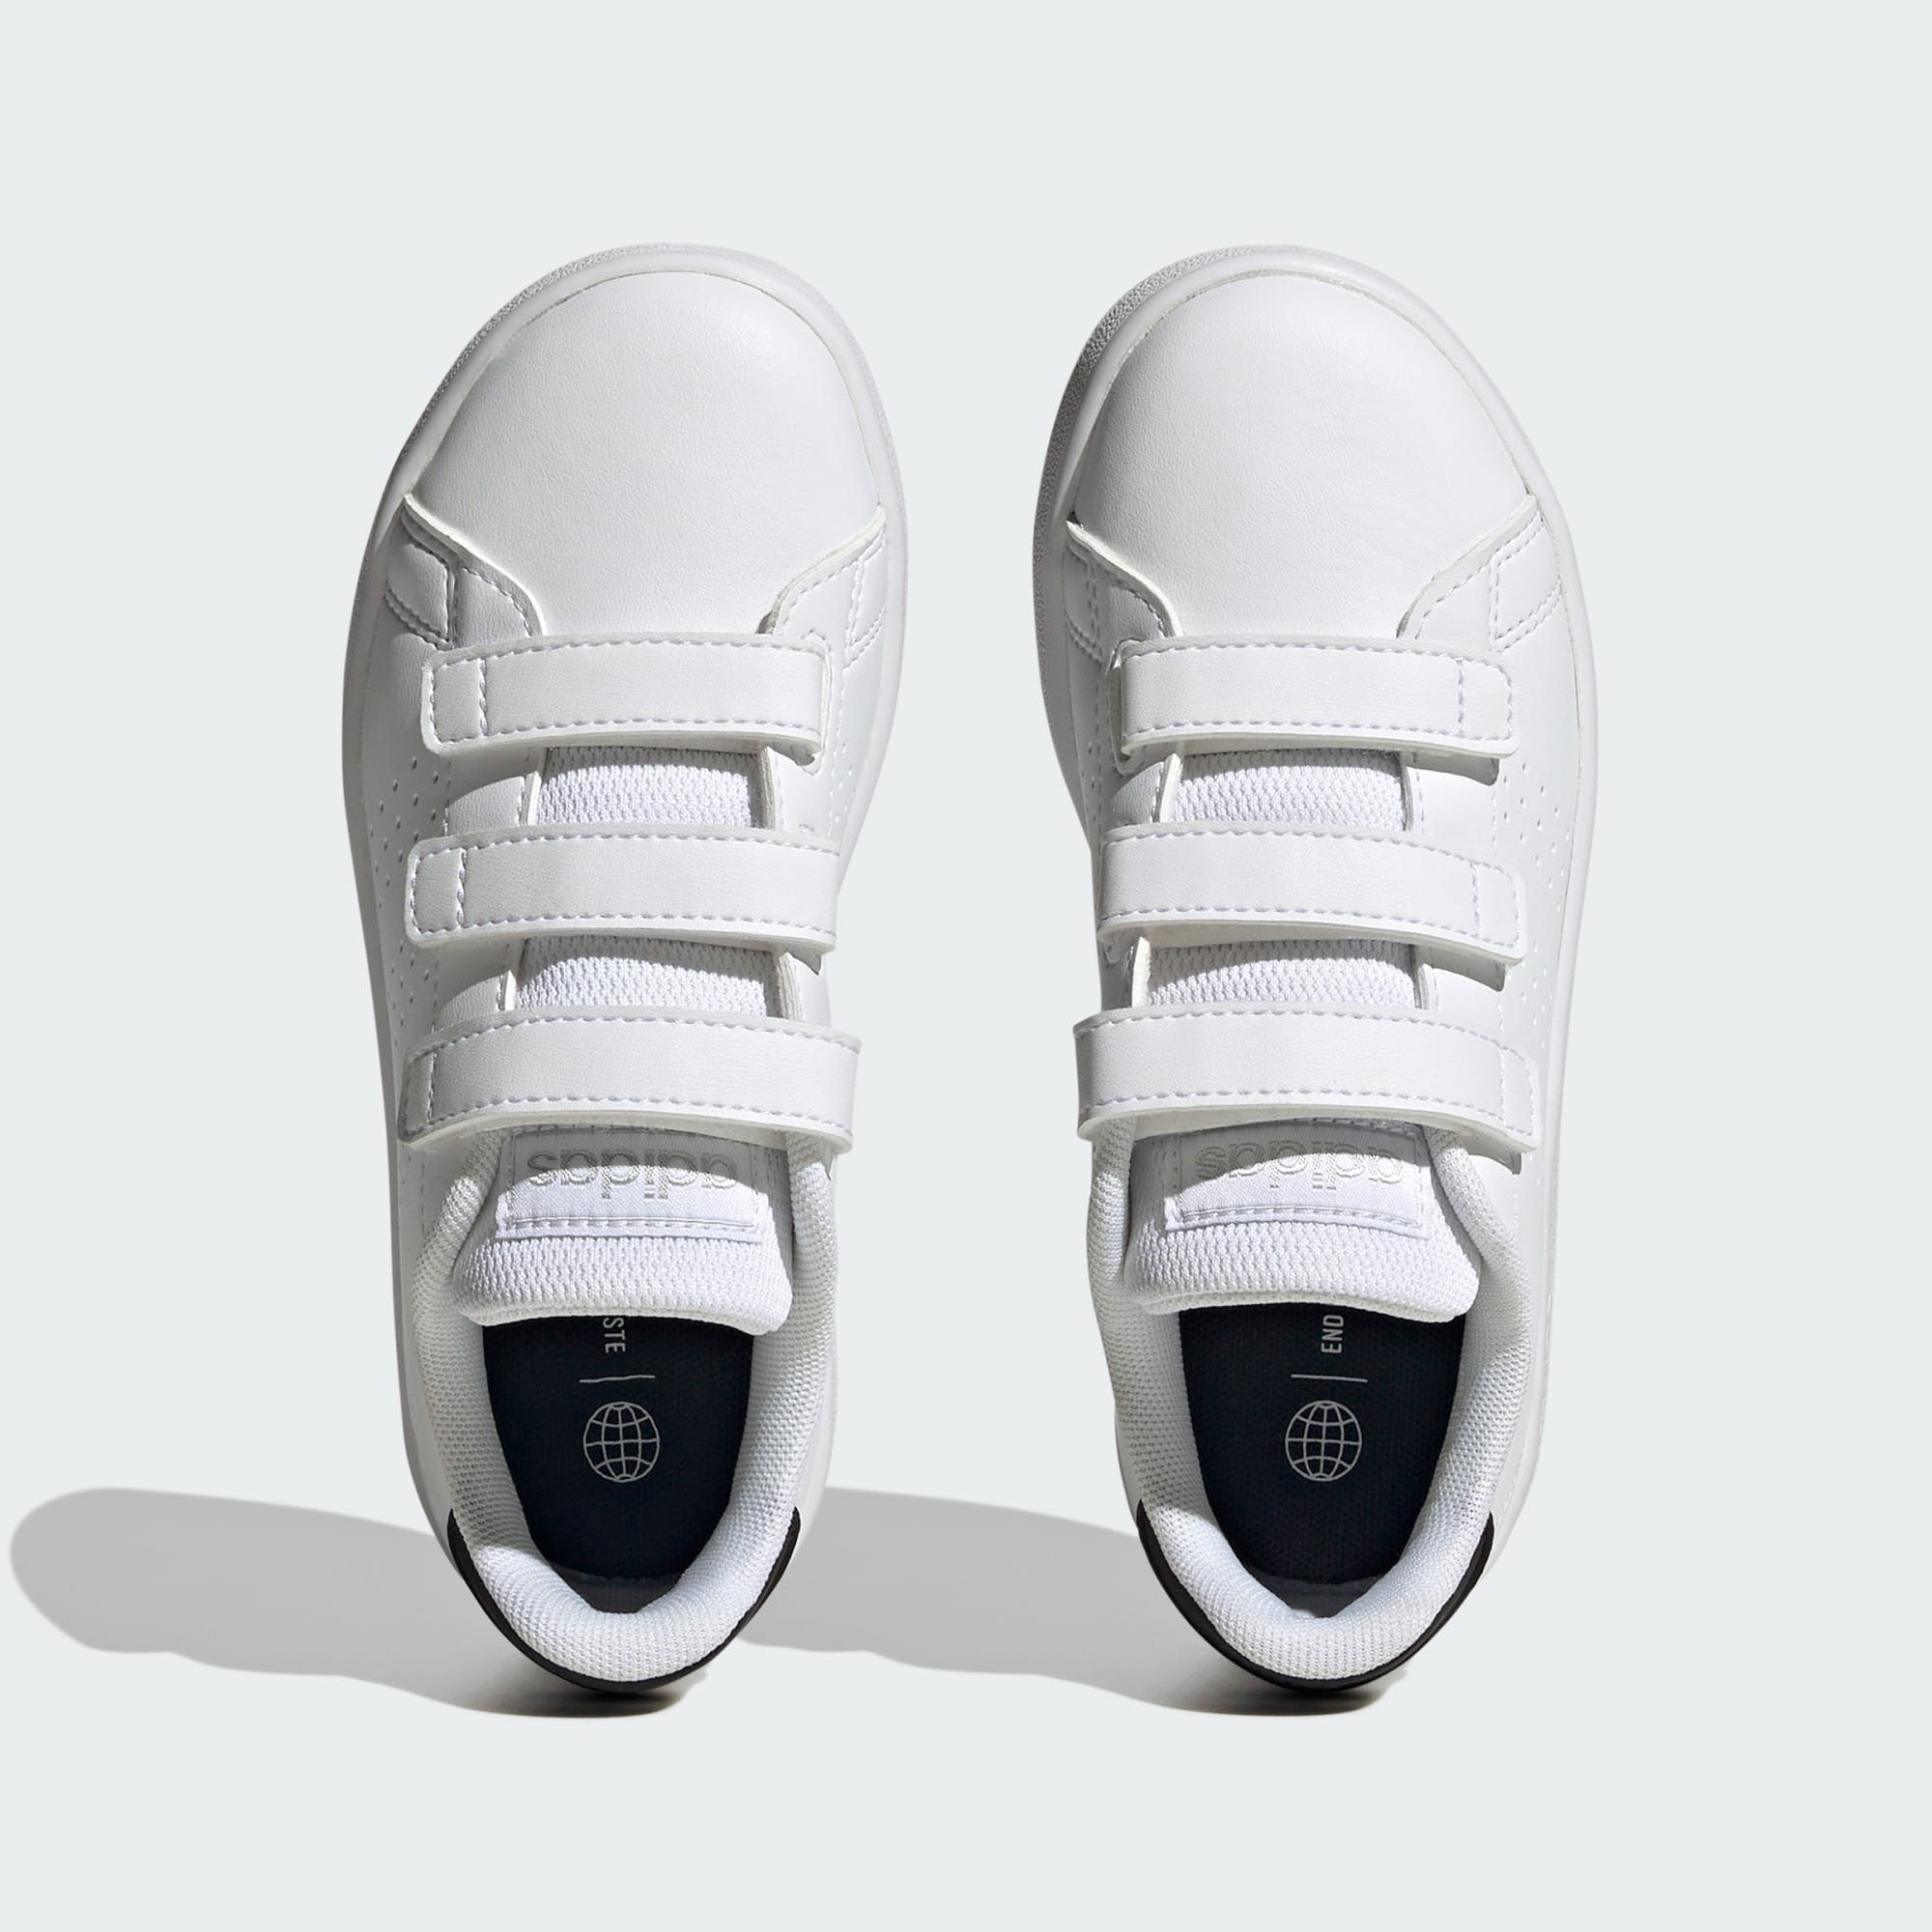 ADVANTAGE / LIFESTYLE Black Silver Sneaker adidas HOOK-AND-LOOP / Cloud Core SCHUH COURT White Sportswear Metallic